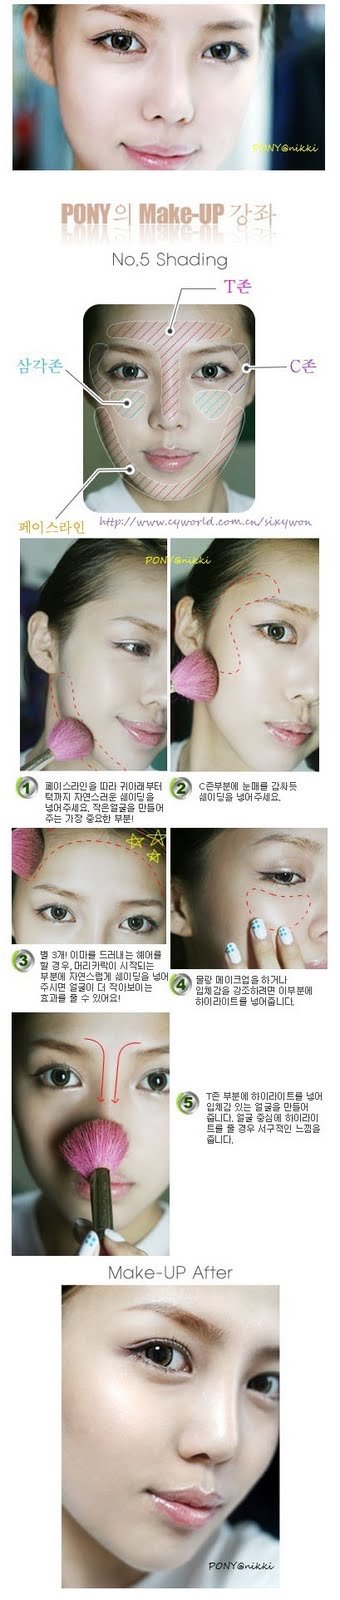 ulzzang-makeup-tutorial-soompi-17_2 Ulzzang make-up tutorial soompi